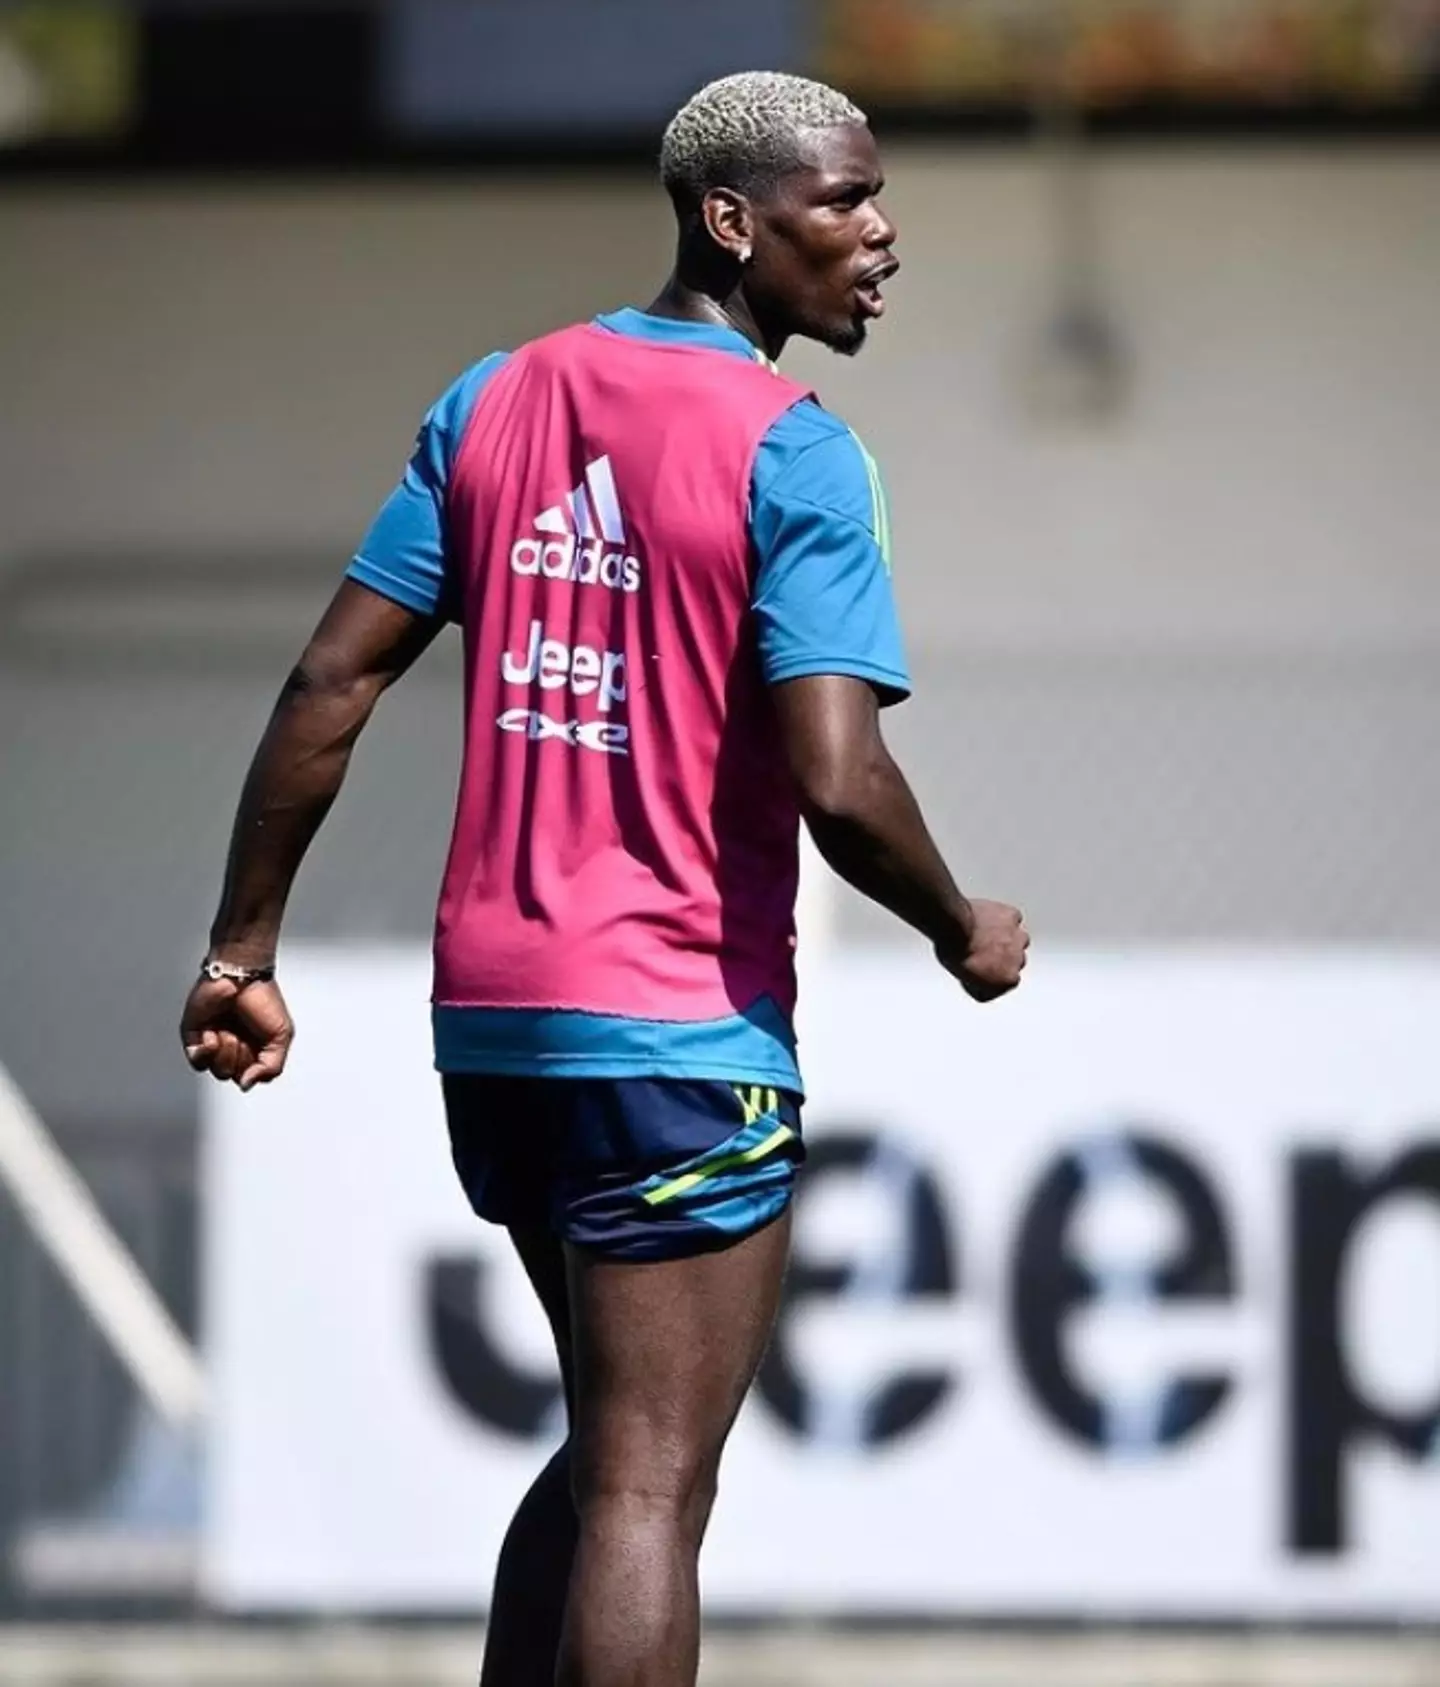 Pogba suffered an injury in training last week (Image: Instagram/PaulPogba)